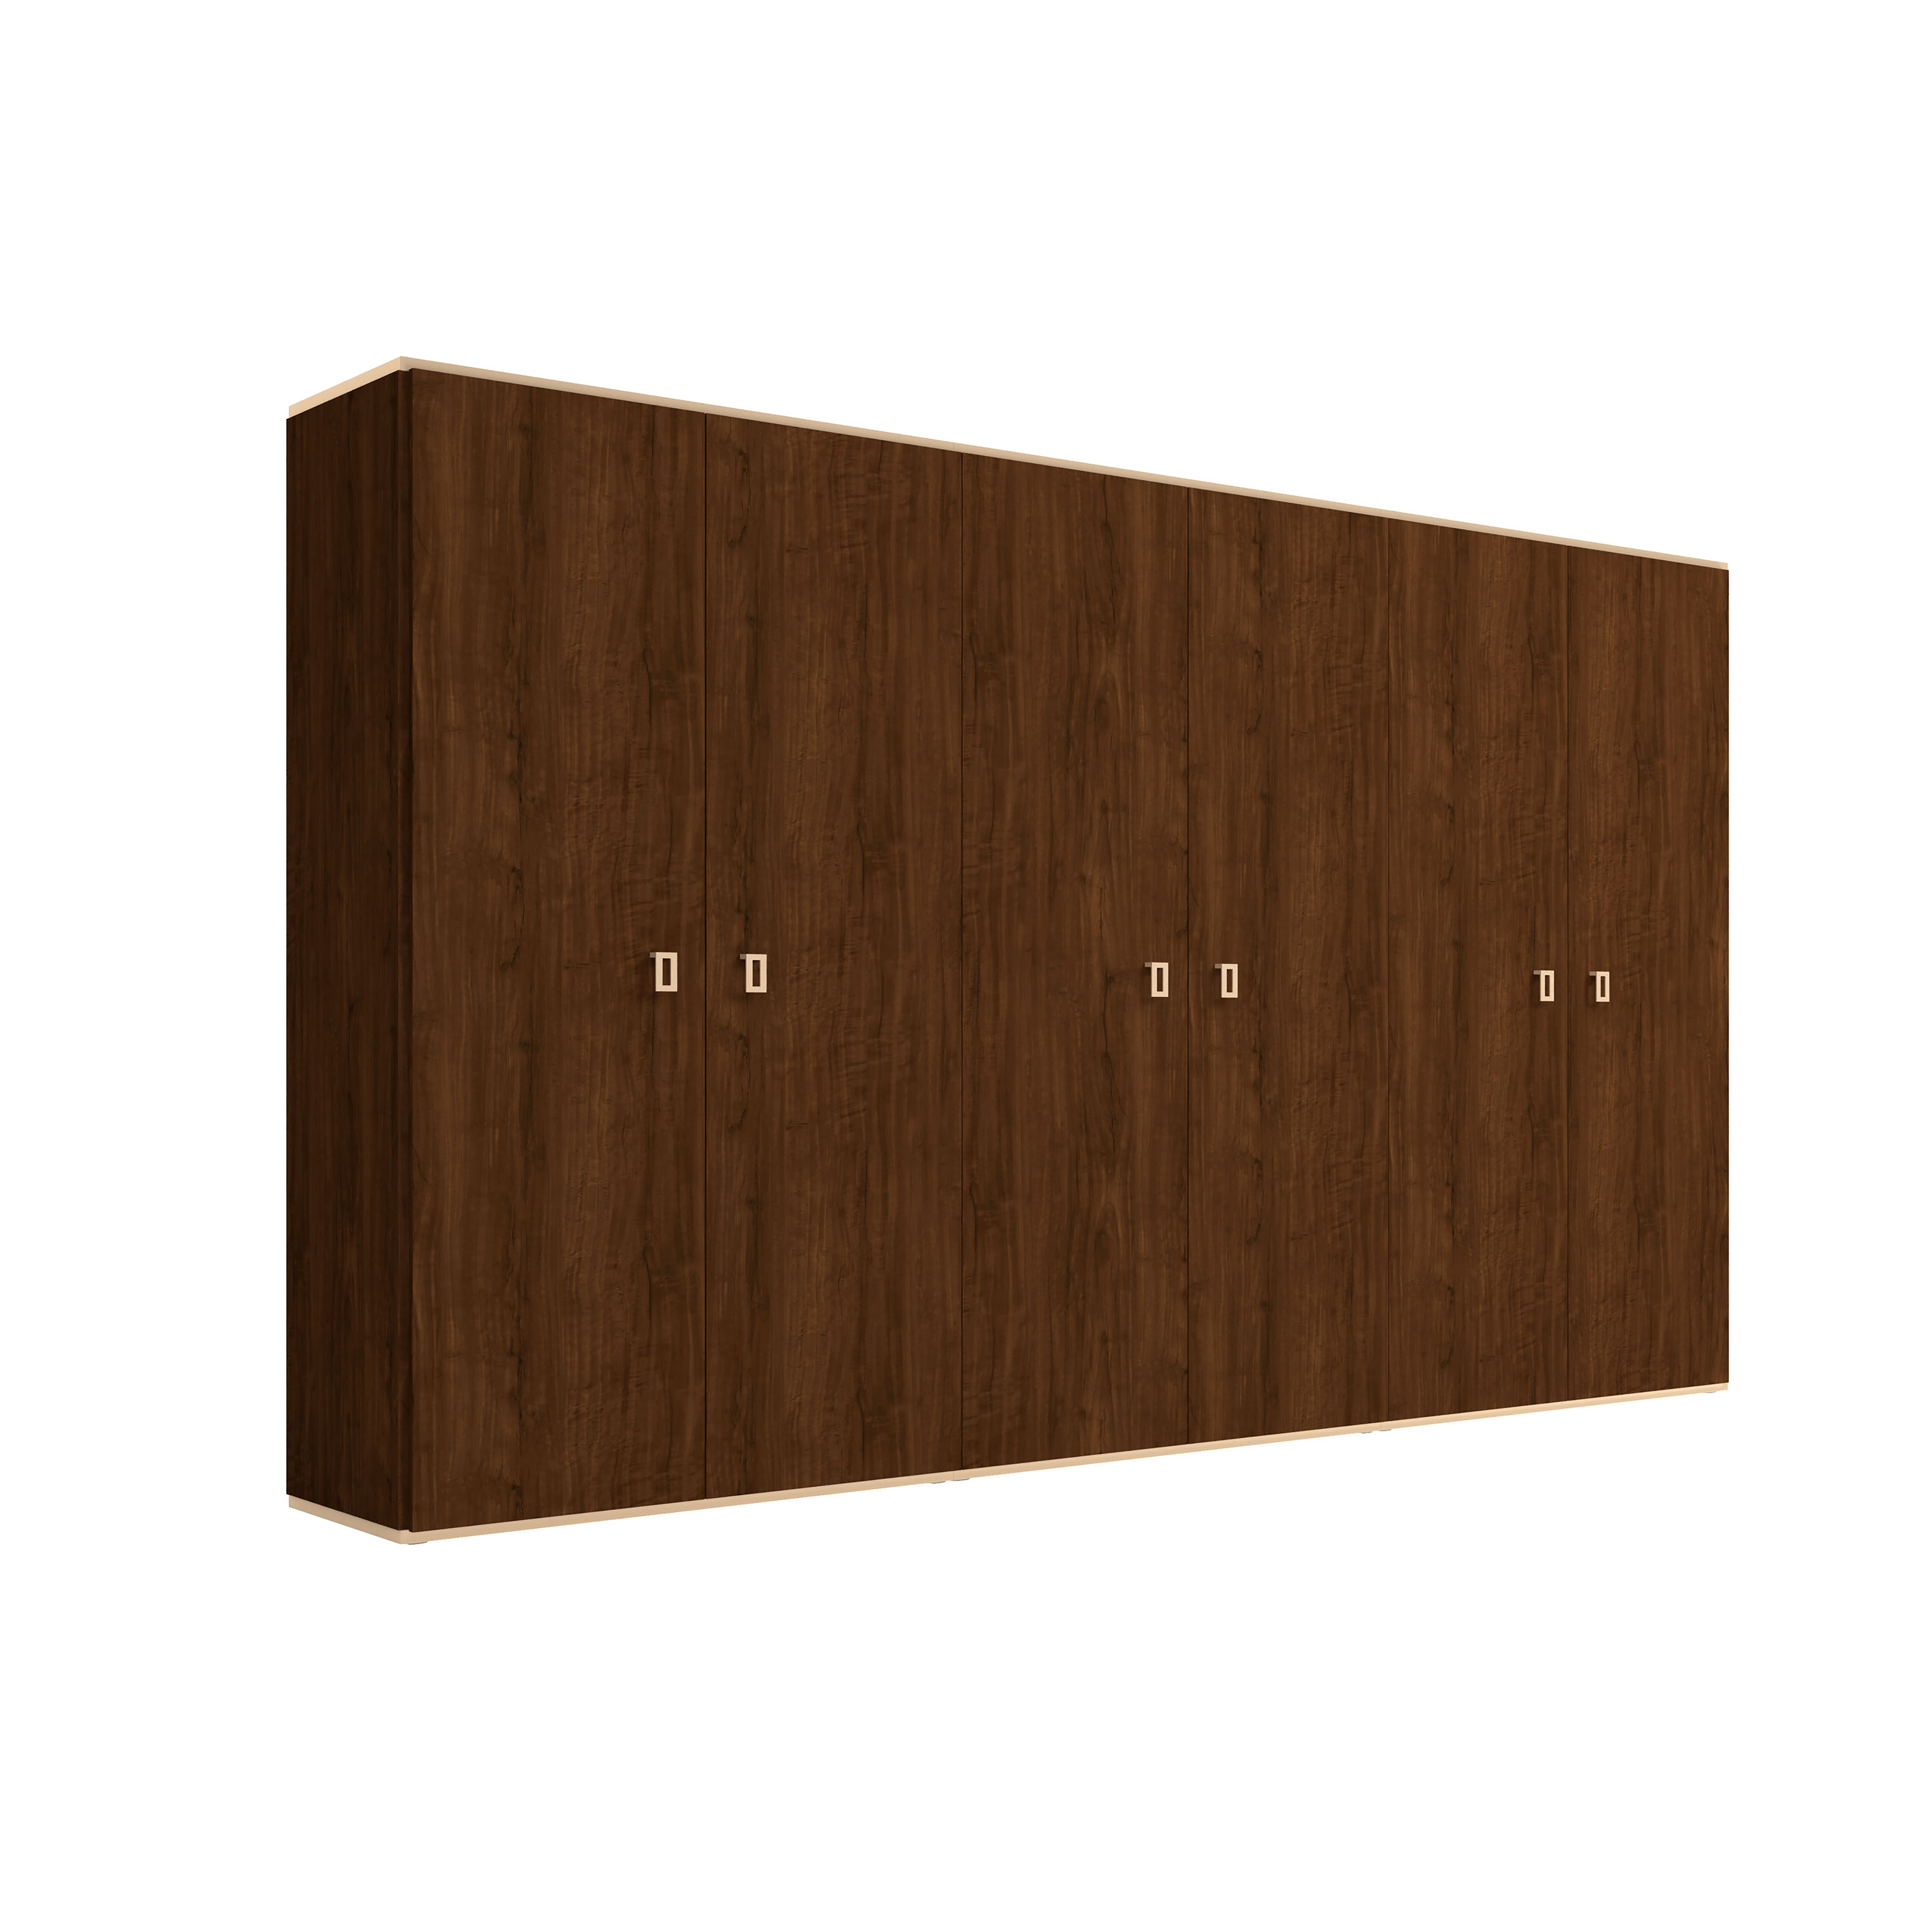 Шкаф Status Eva, шестидверный, цвет орех, 324x61x232 см (EABNOAR03)EABNOAR03